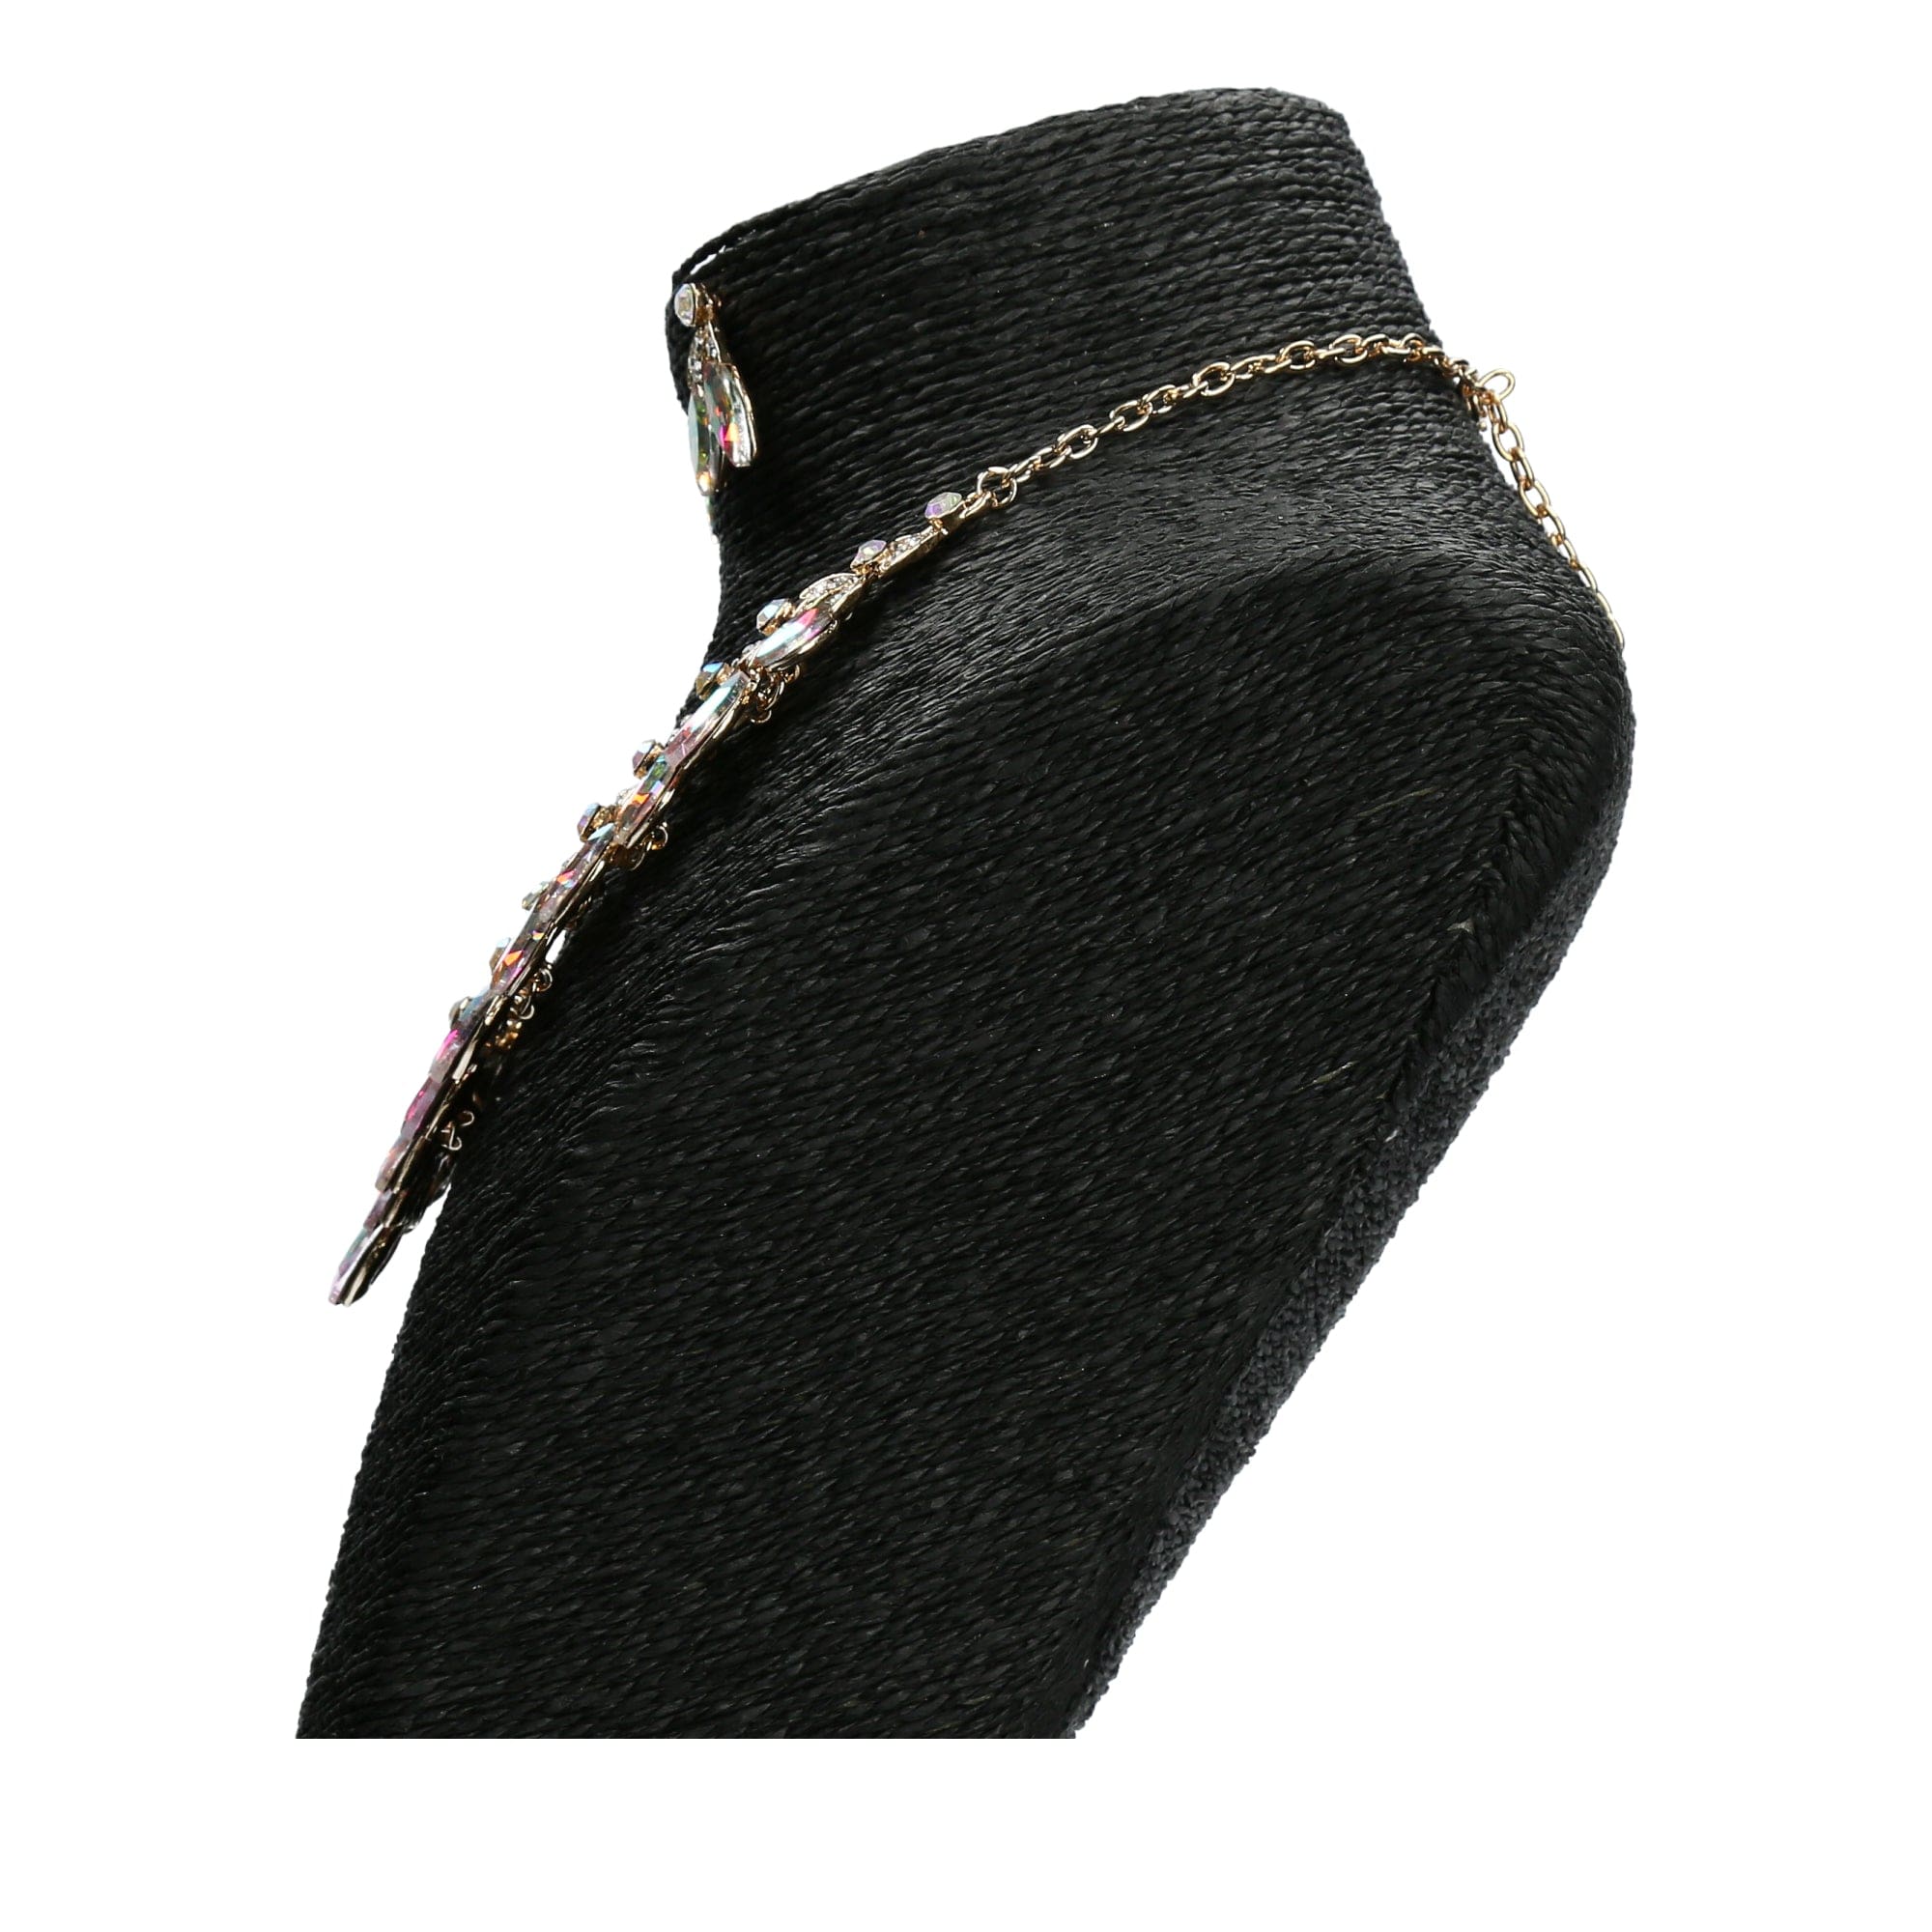 Perla smyckeset - Halsband